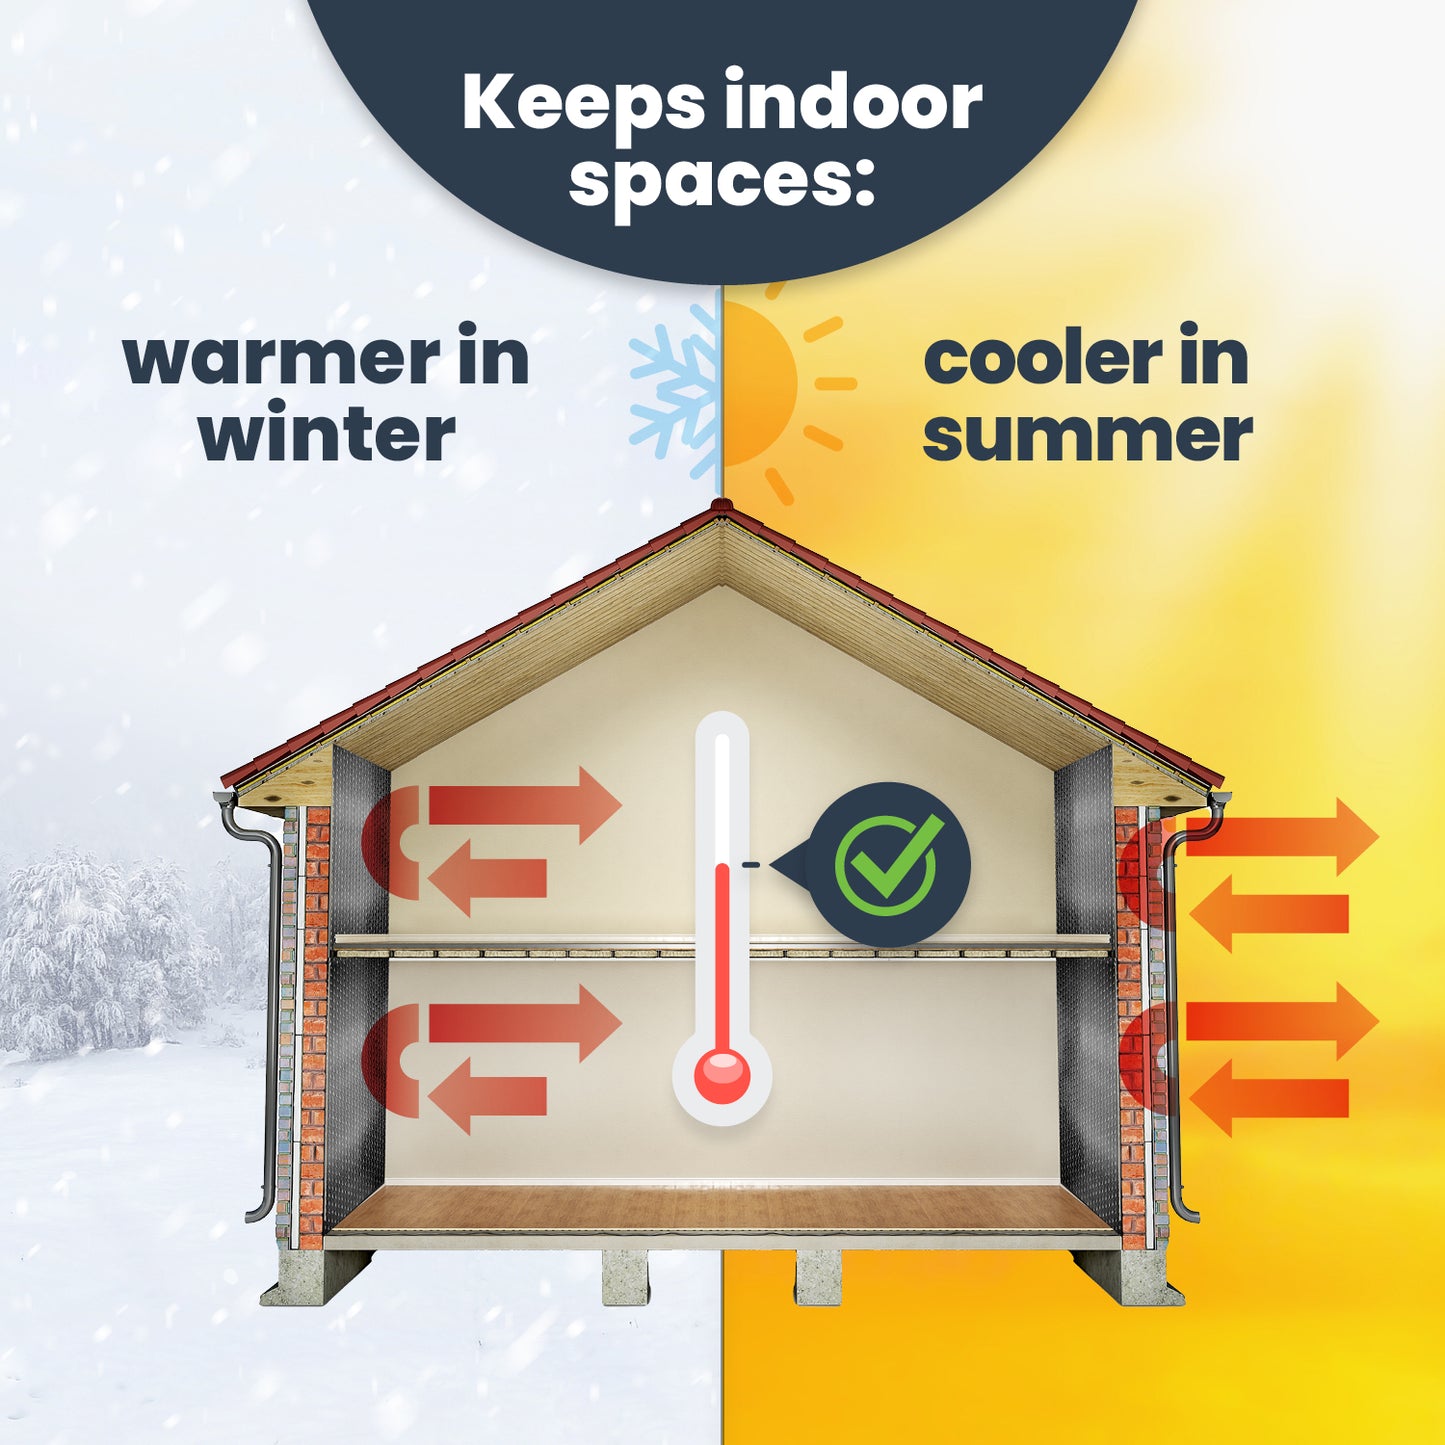 double bubble insulation keeps indoor spaces warmer in winter, cooler in summer